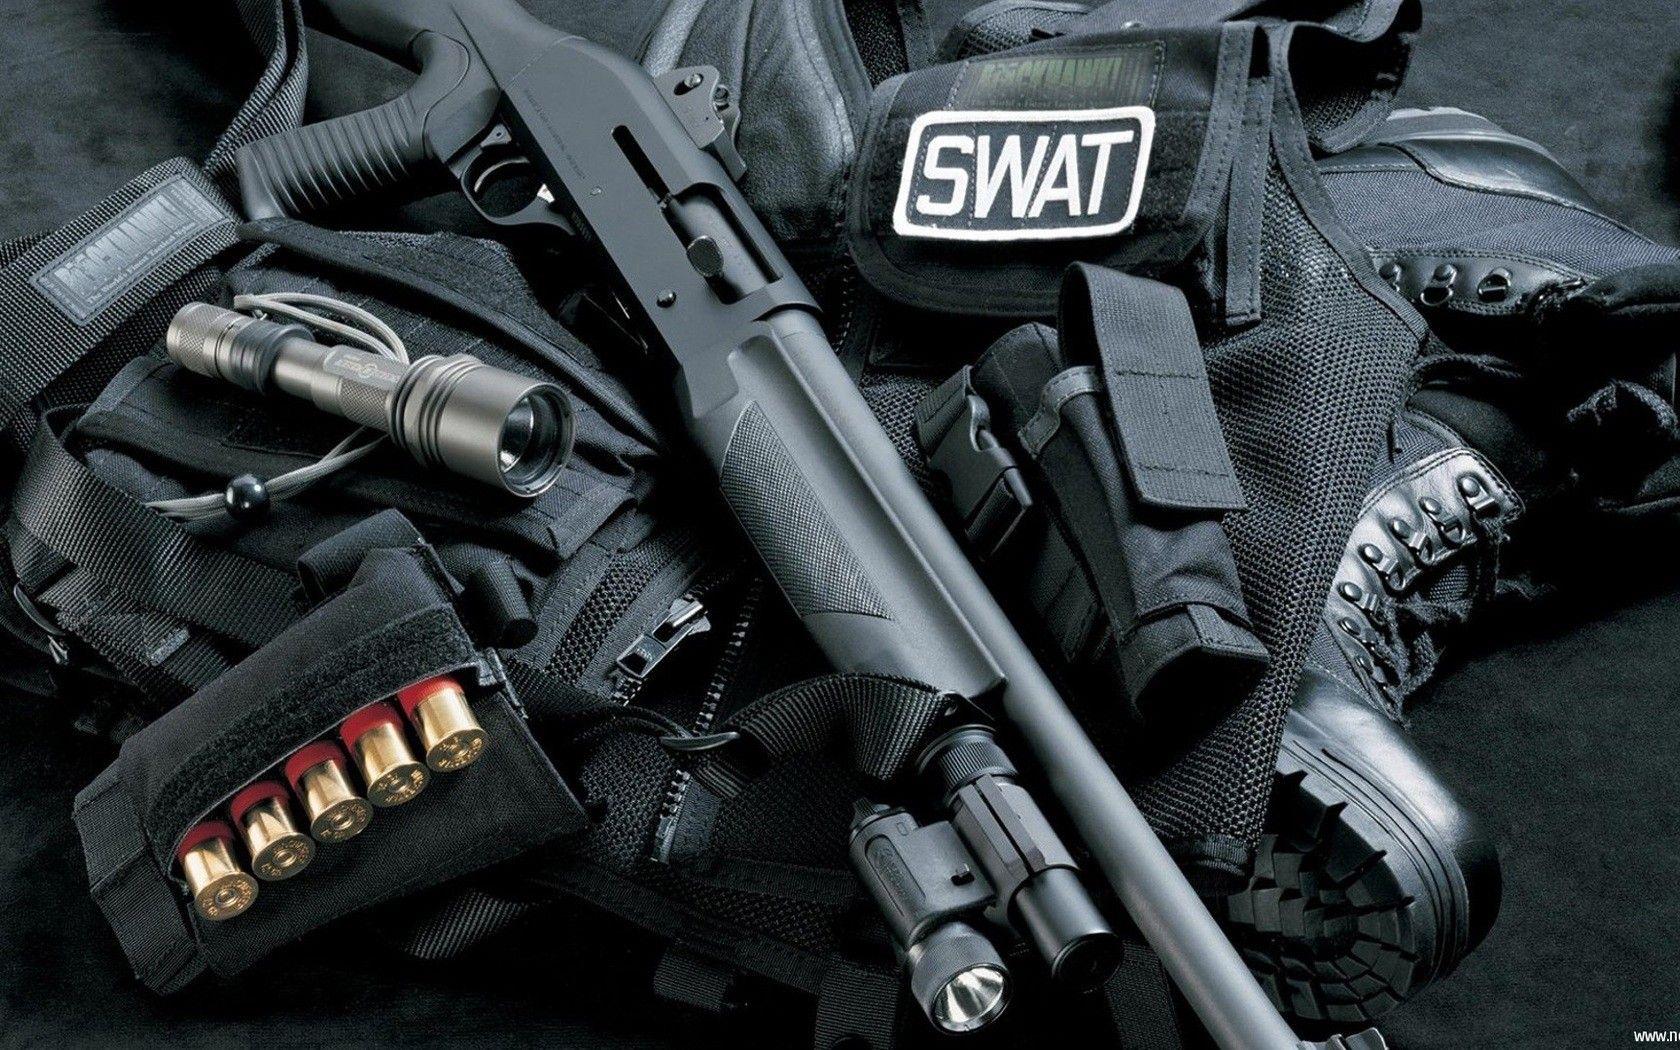 Download the SWAT Gear Wallpaper, SWAT Gear iPhone Wallpaper, SWAT